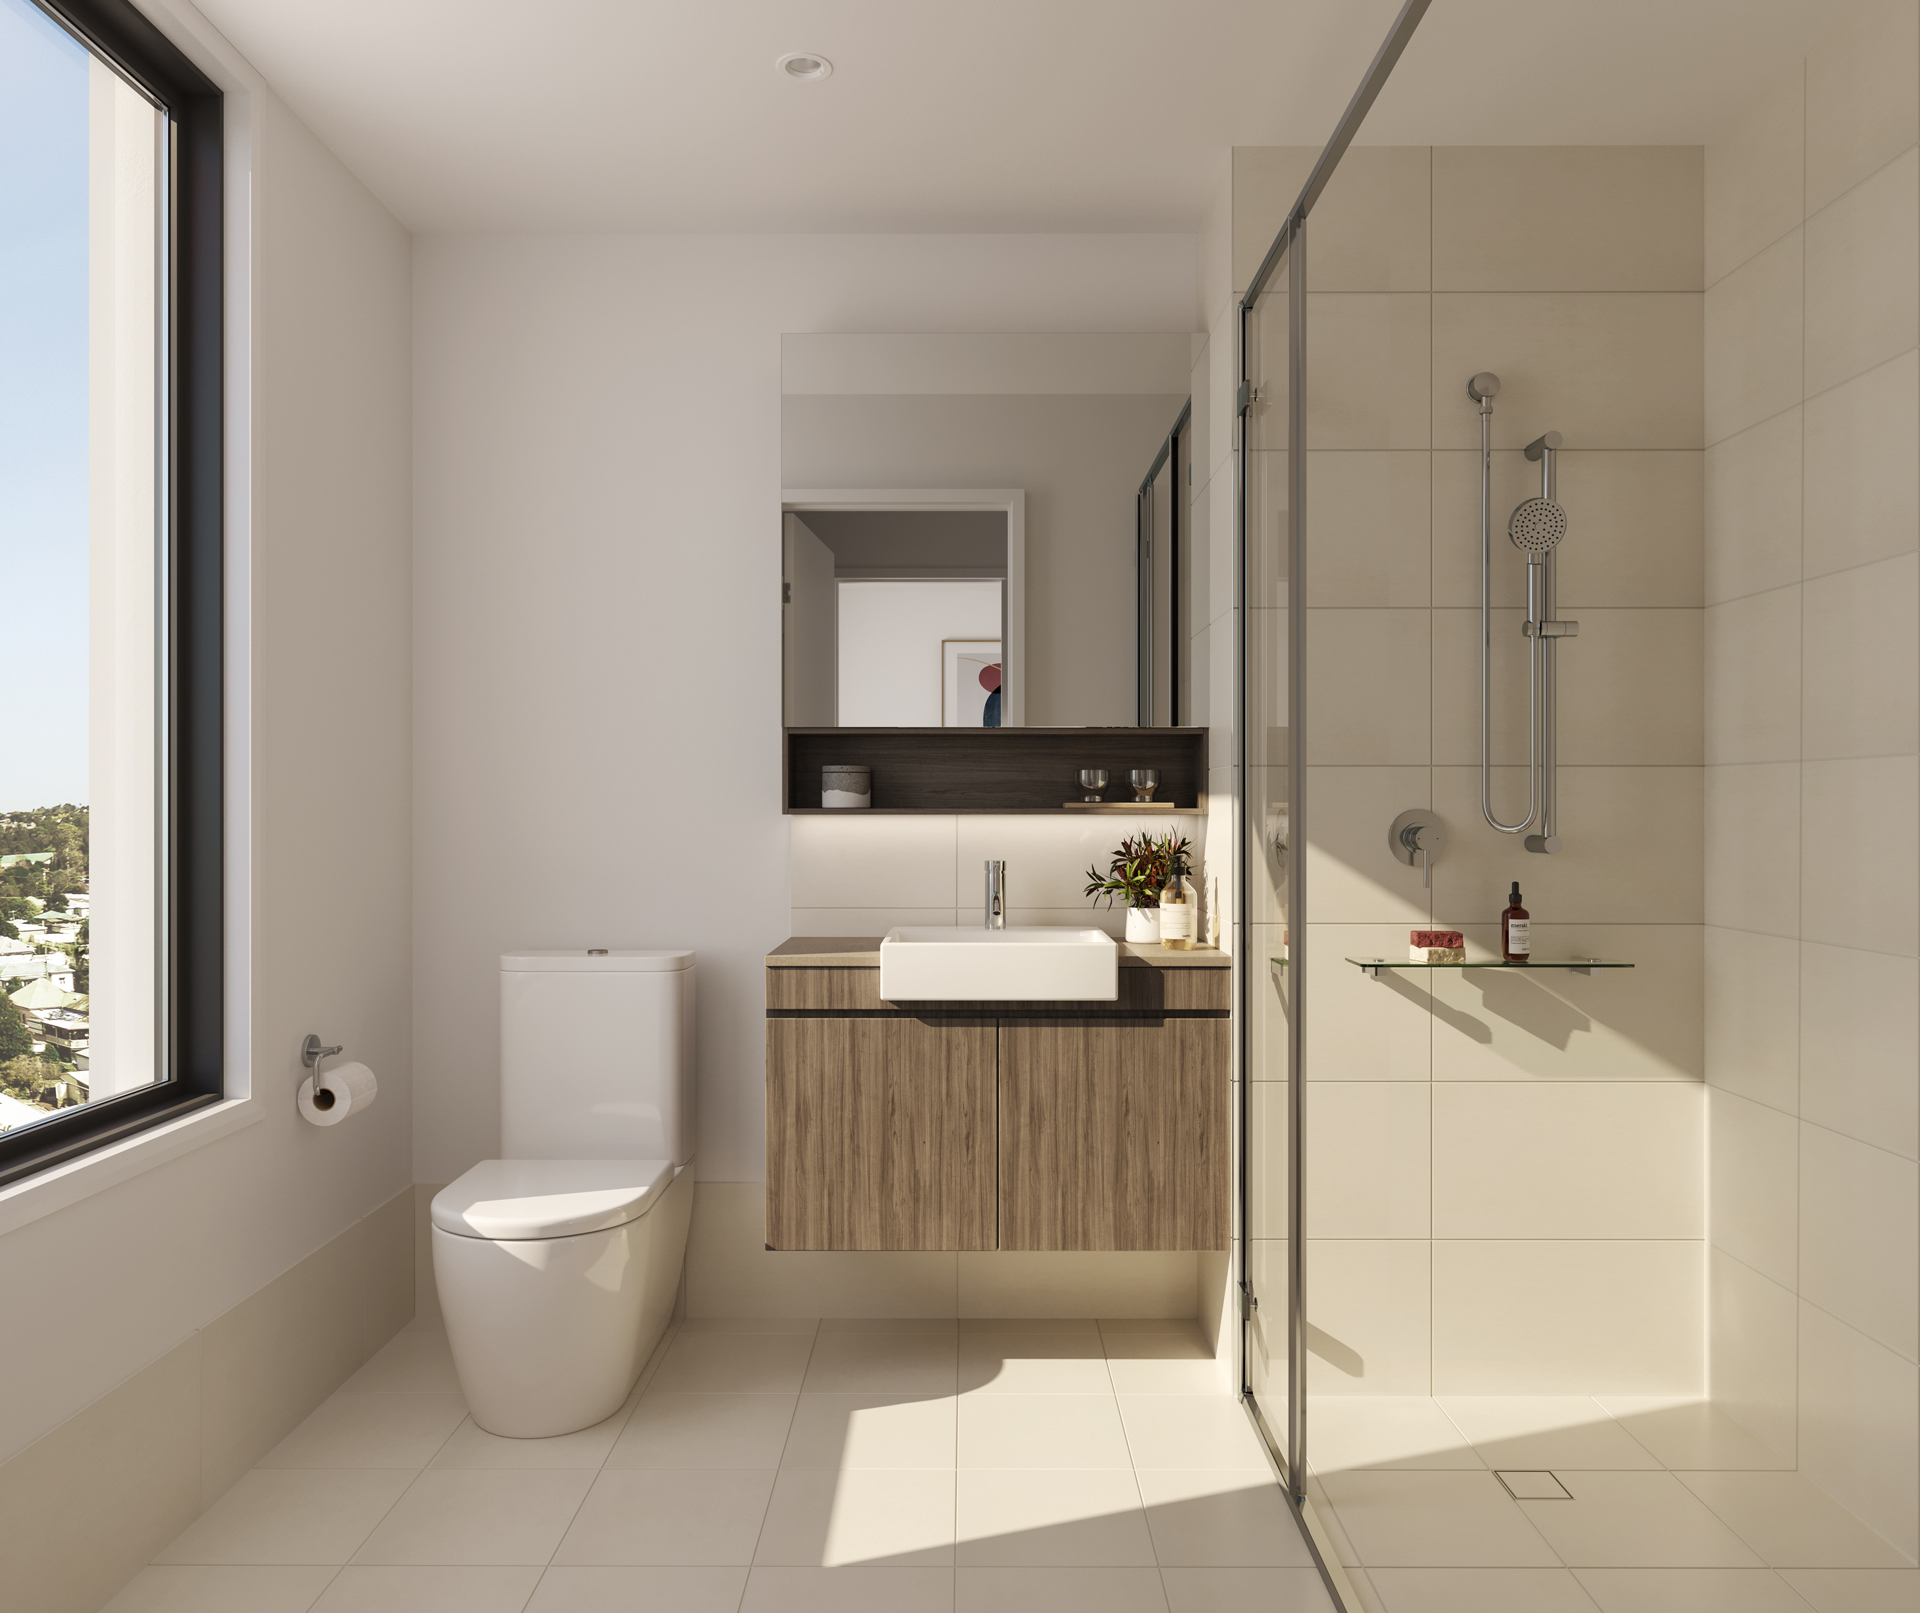 modern designed bathroom with abundant natural light through a large window